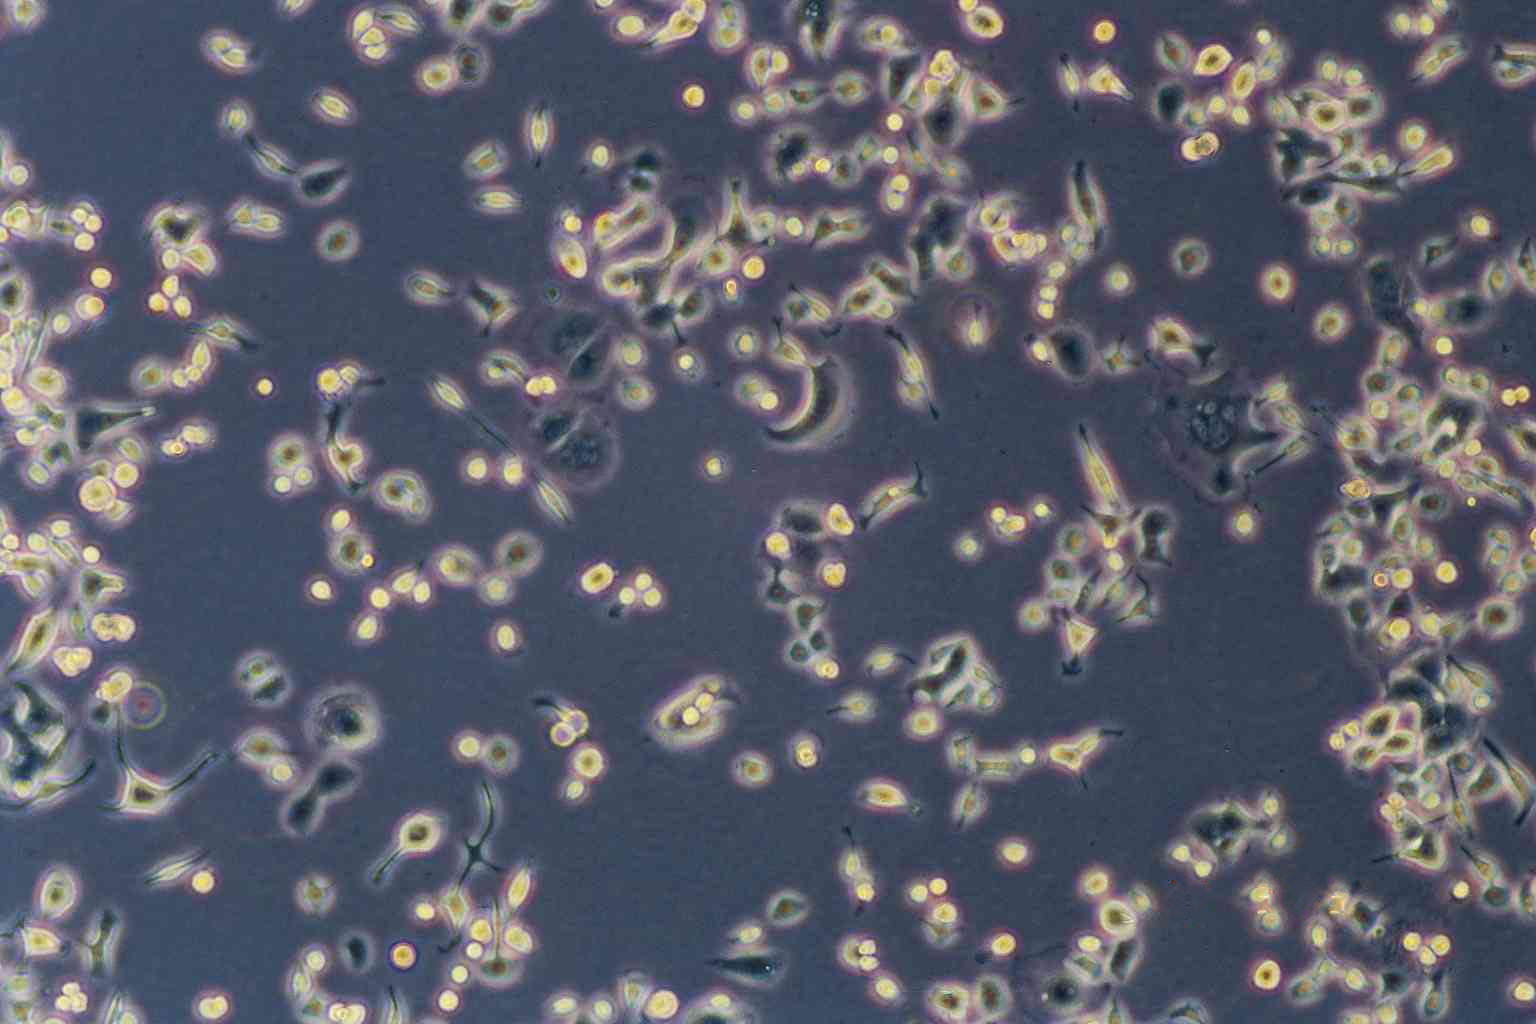 MCF-10A Cells|人正常乳腺上皮细胞系,MCF-10A Cells